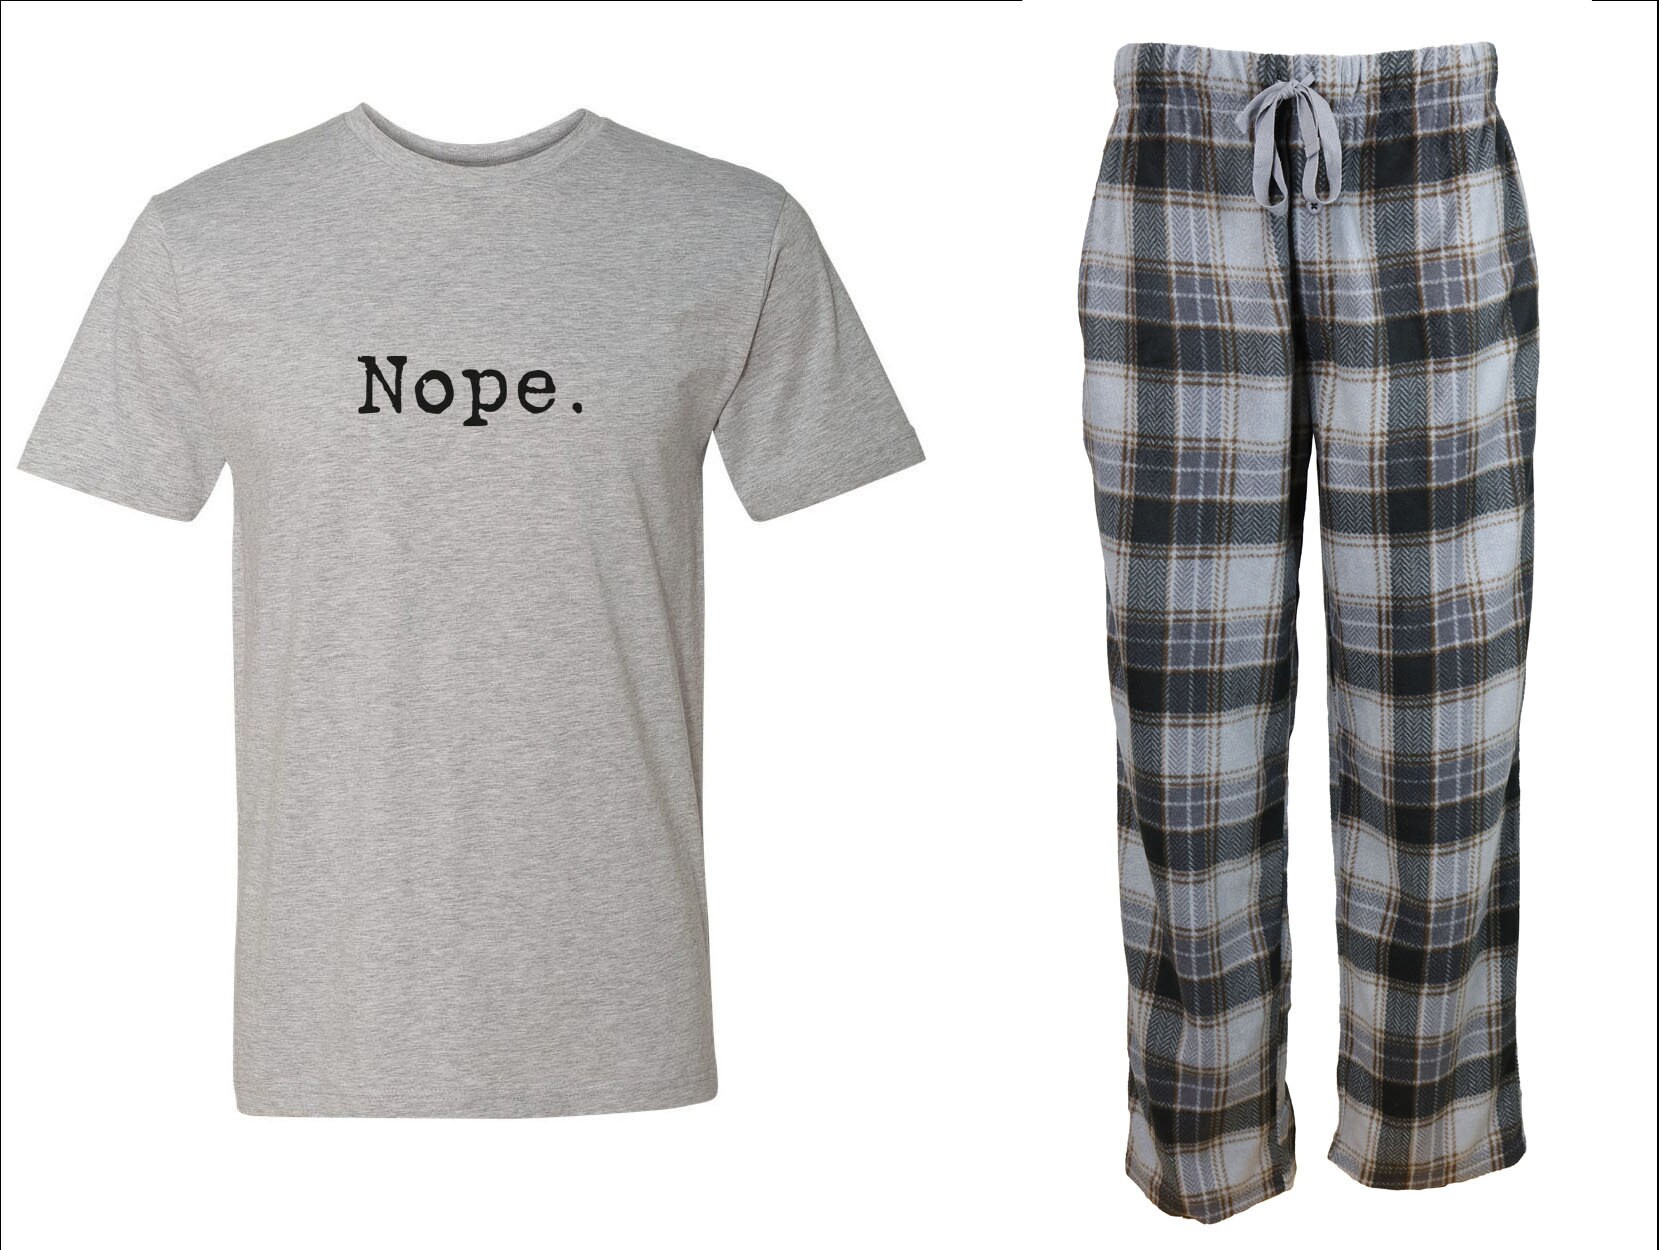 Meh Mens Grey Plaid Pajama Set Fleece Pajama Set, Pjs, Mens Pjs, Plaid  Pajamas, Gift for Him, Dad, Teen, College, Sarcasm, Plus Size 